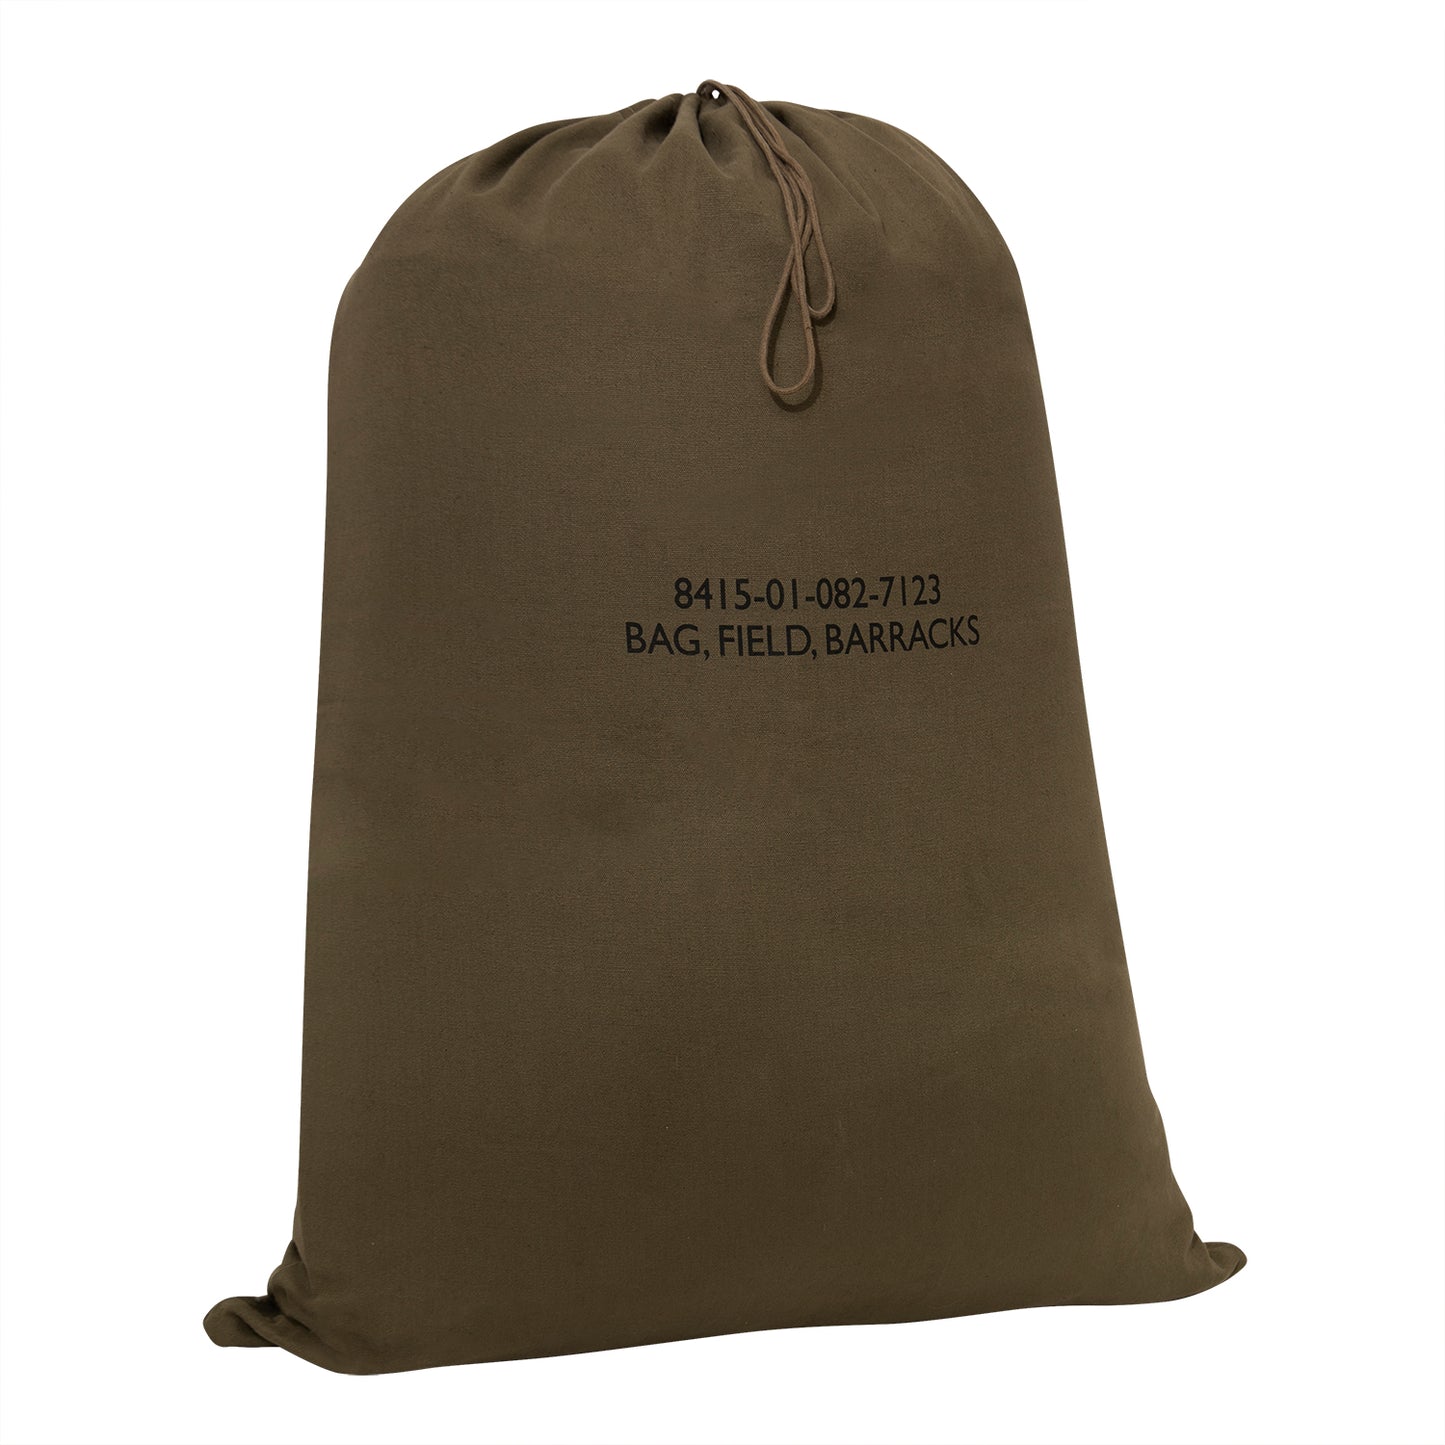 Milspec G.I. Type Canvas Barracks Bag Laundry Bags MilTac Tactical Military Outdoor Gear Australia